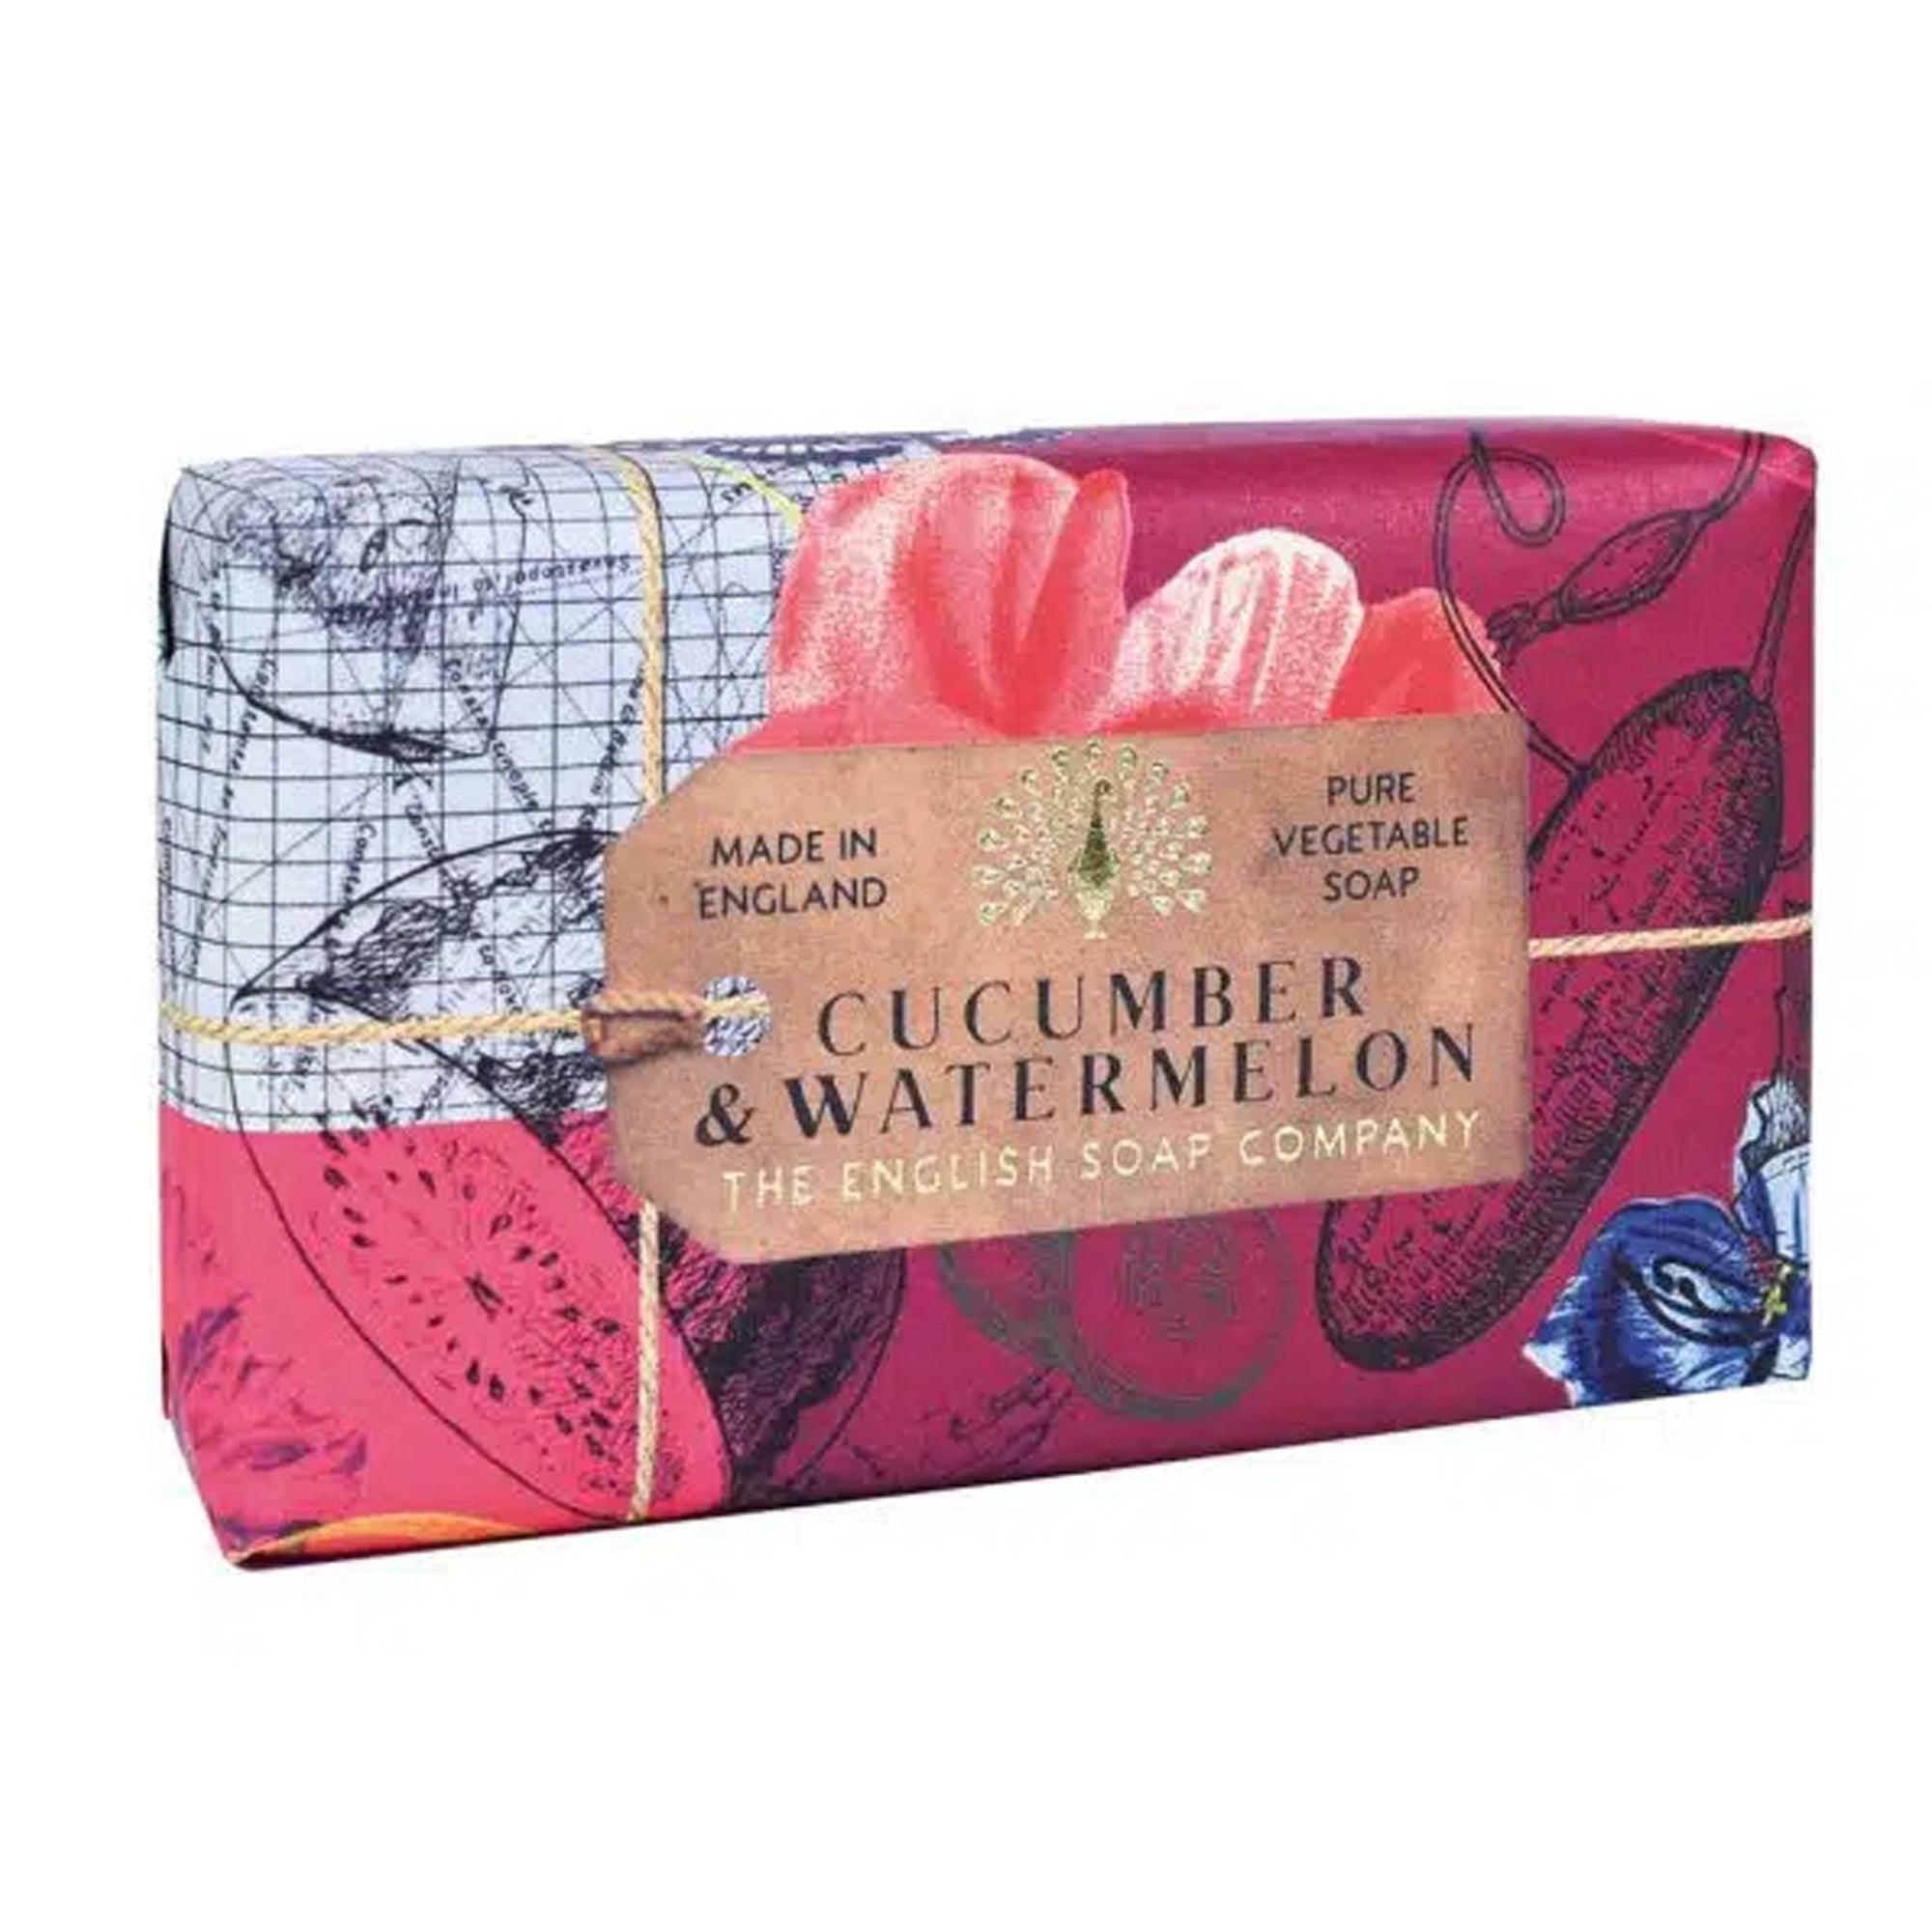 Cucumber & Watermelon Soap - Boo•kay ldn